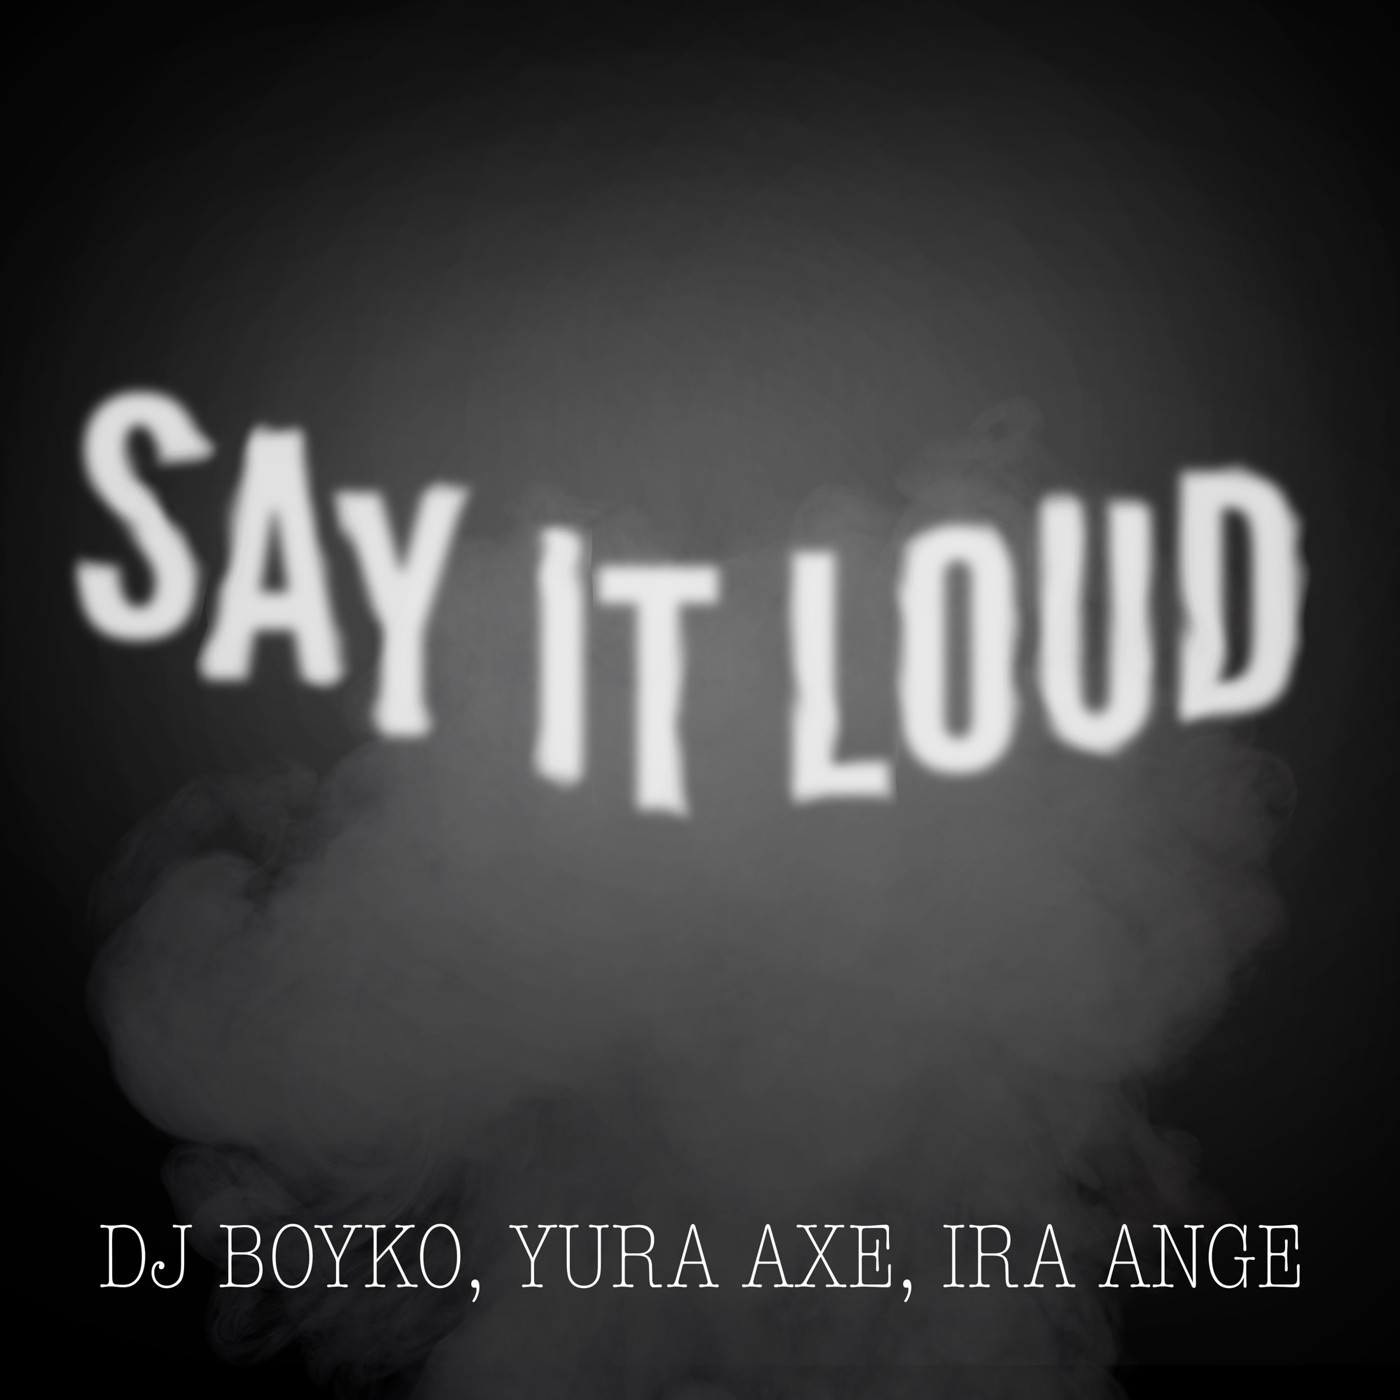 Dj Boyko & Yura Axe feat. Pola Green  - Say It Loud (Radio Mix)